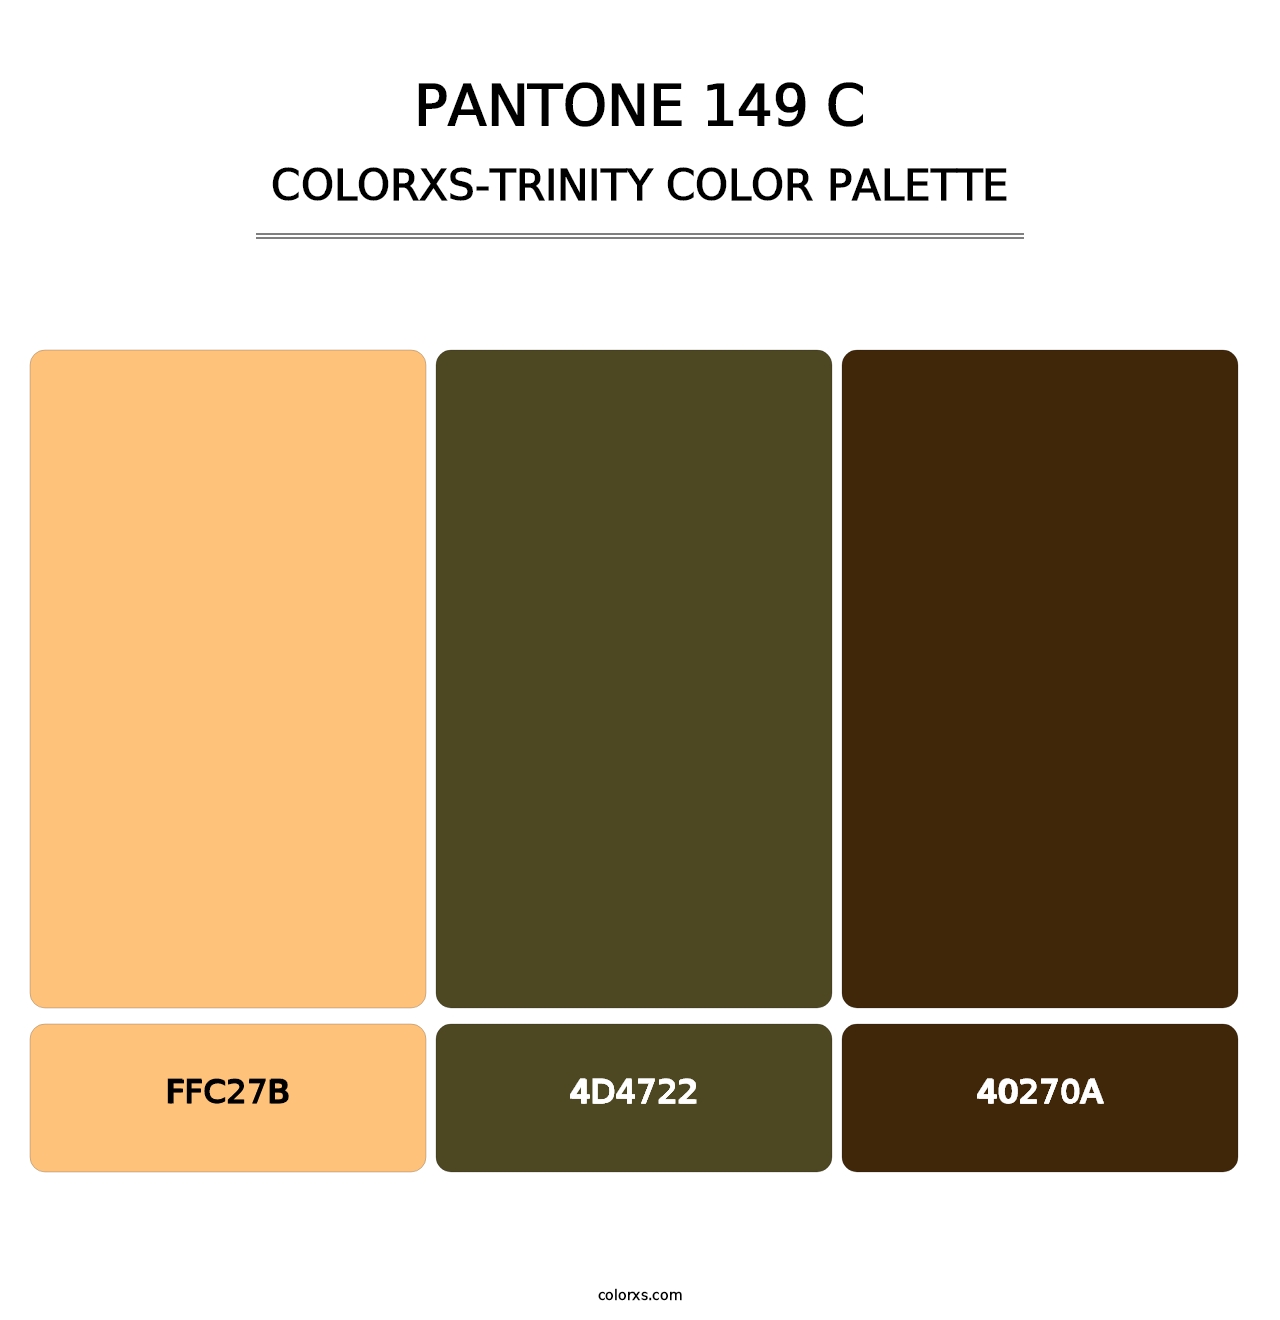 PANTONE 149 C - Colorxs Trinity Palette